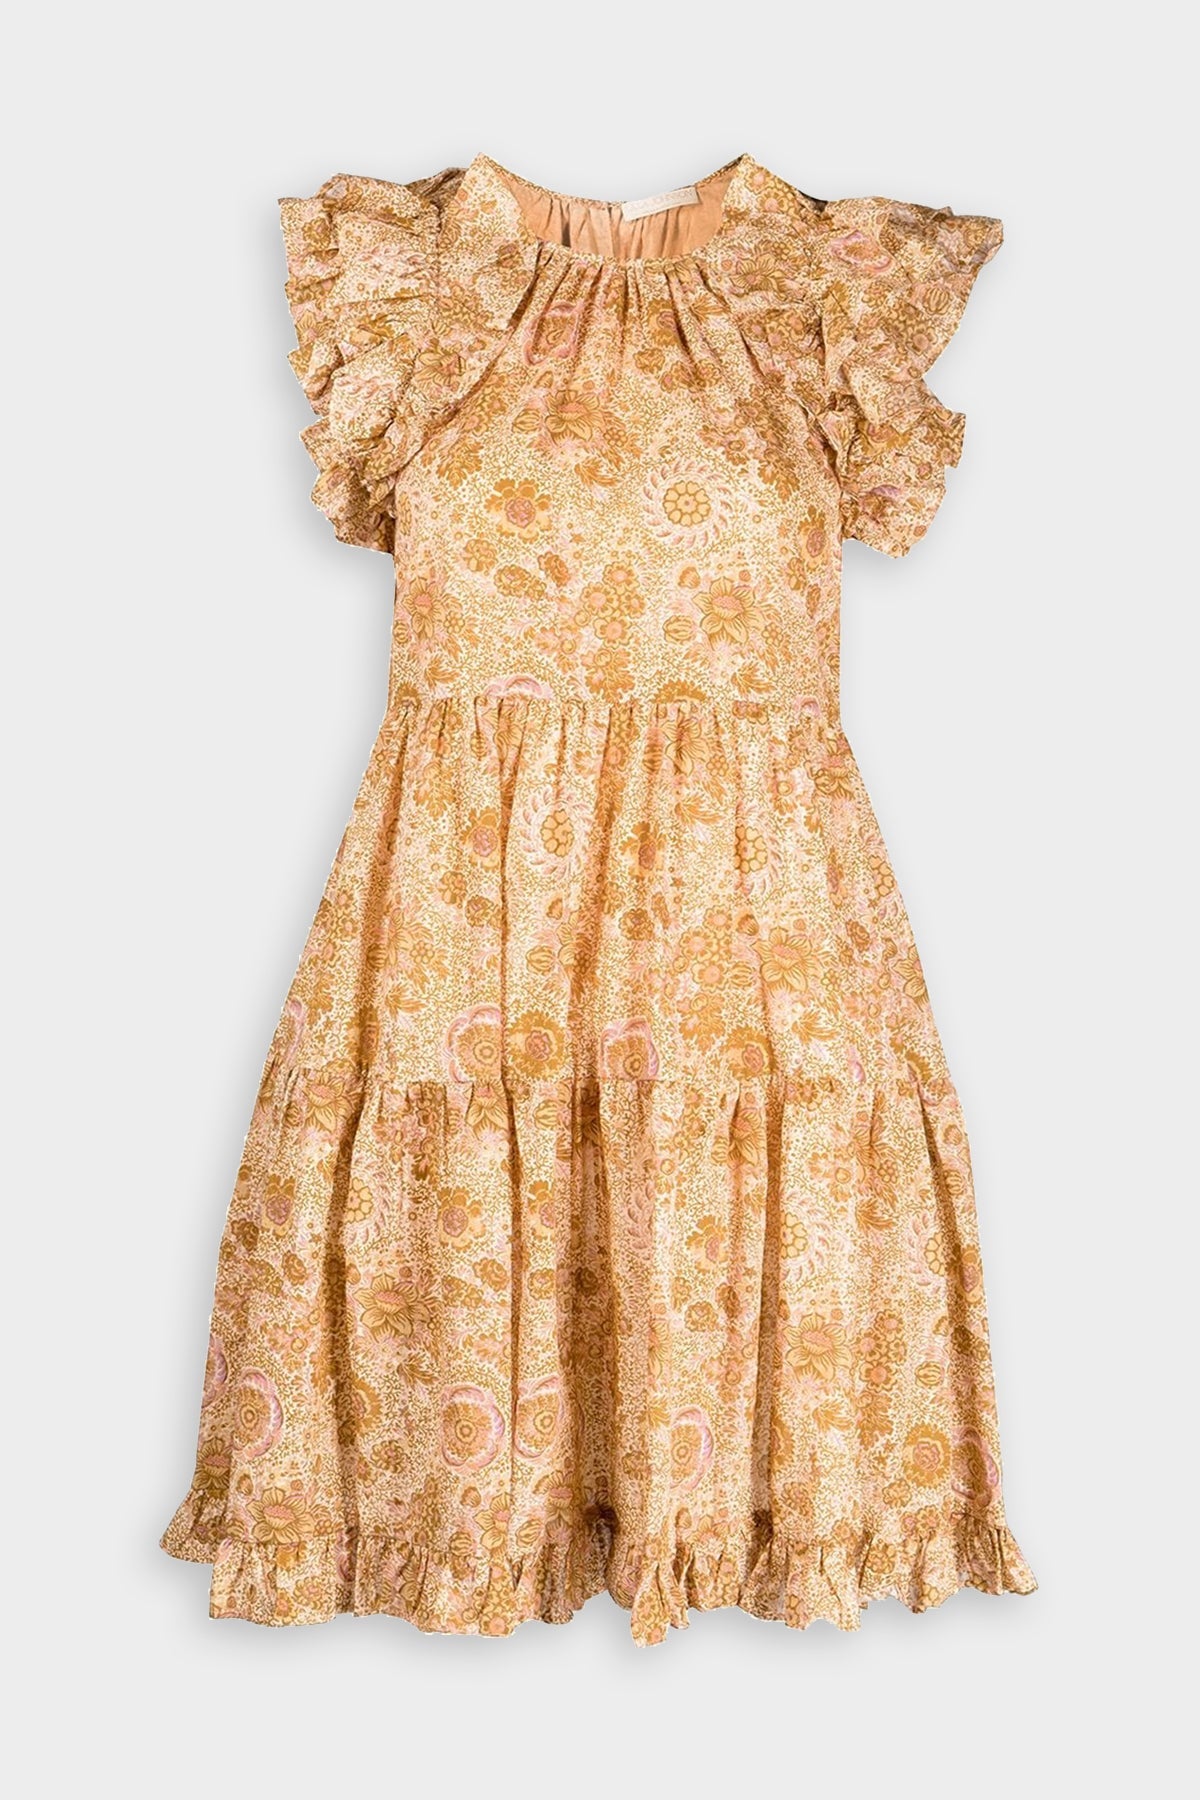 Adele Dress in Meadow - shop-olivia.com